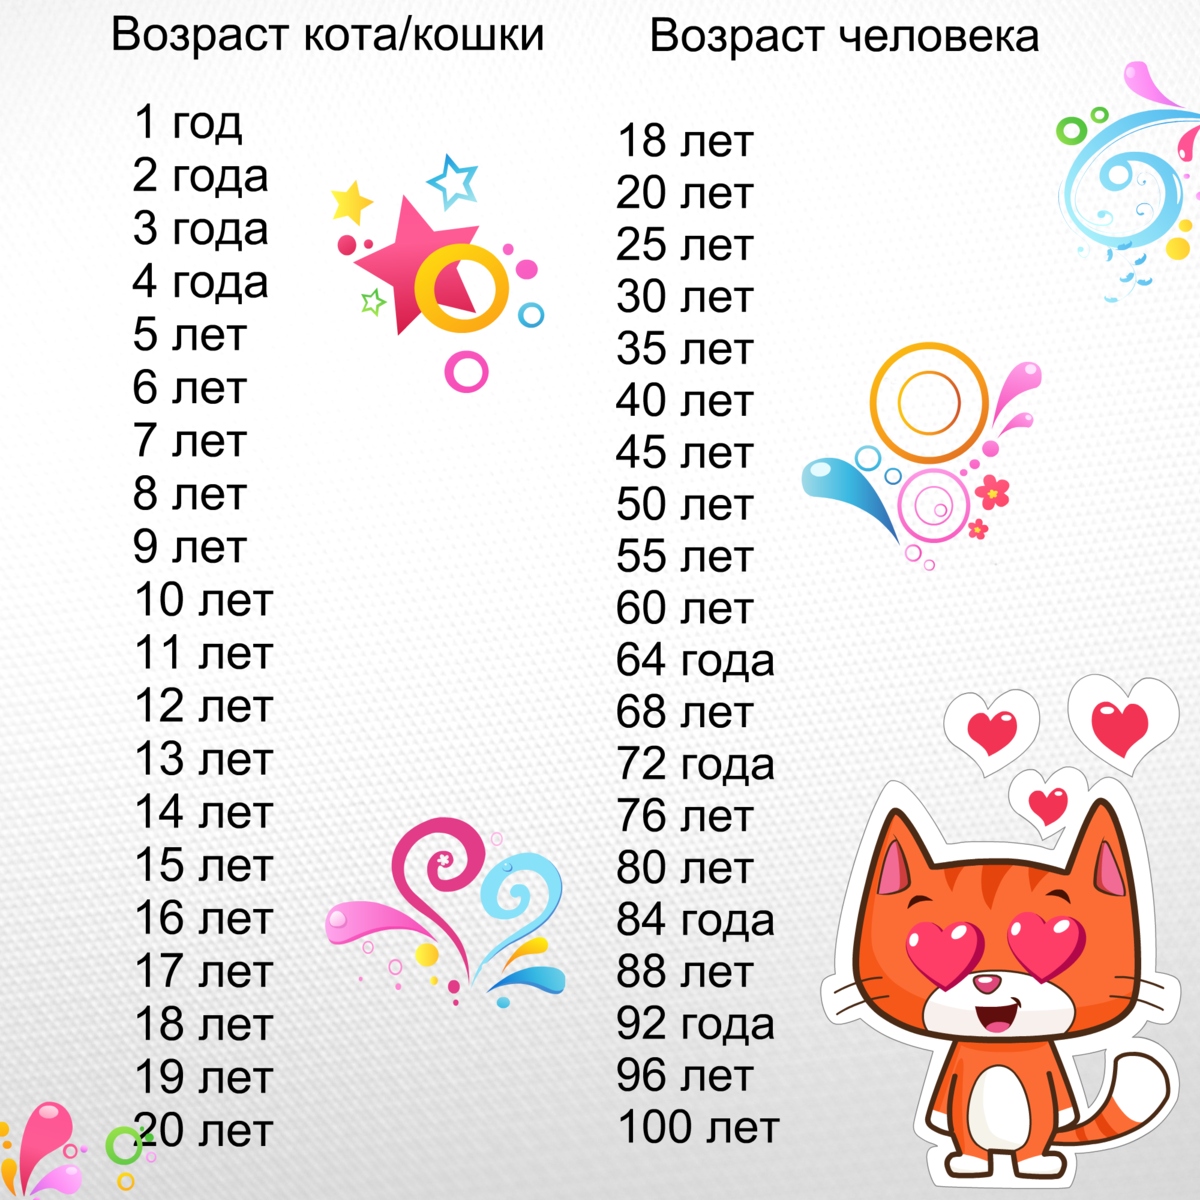 Возраст кошки по человеческим меркам: таблица расчёта лет